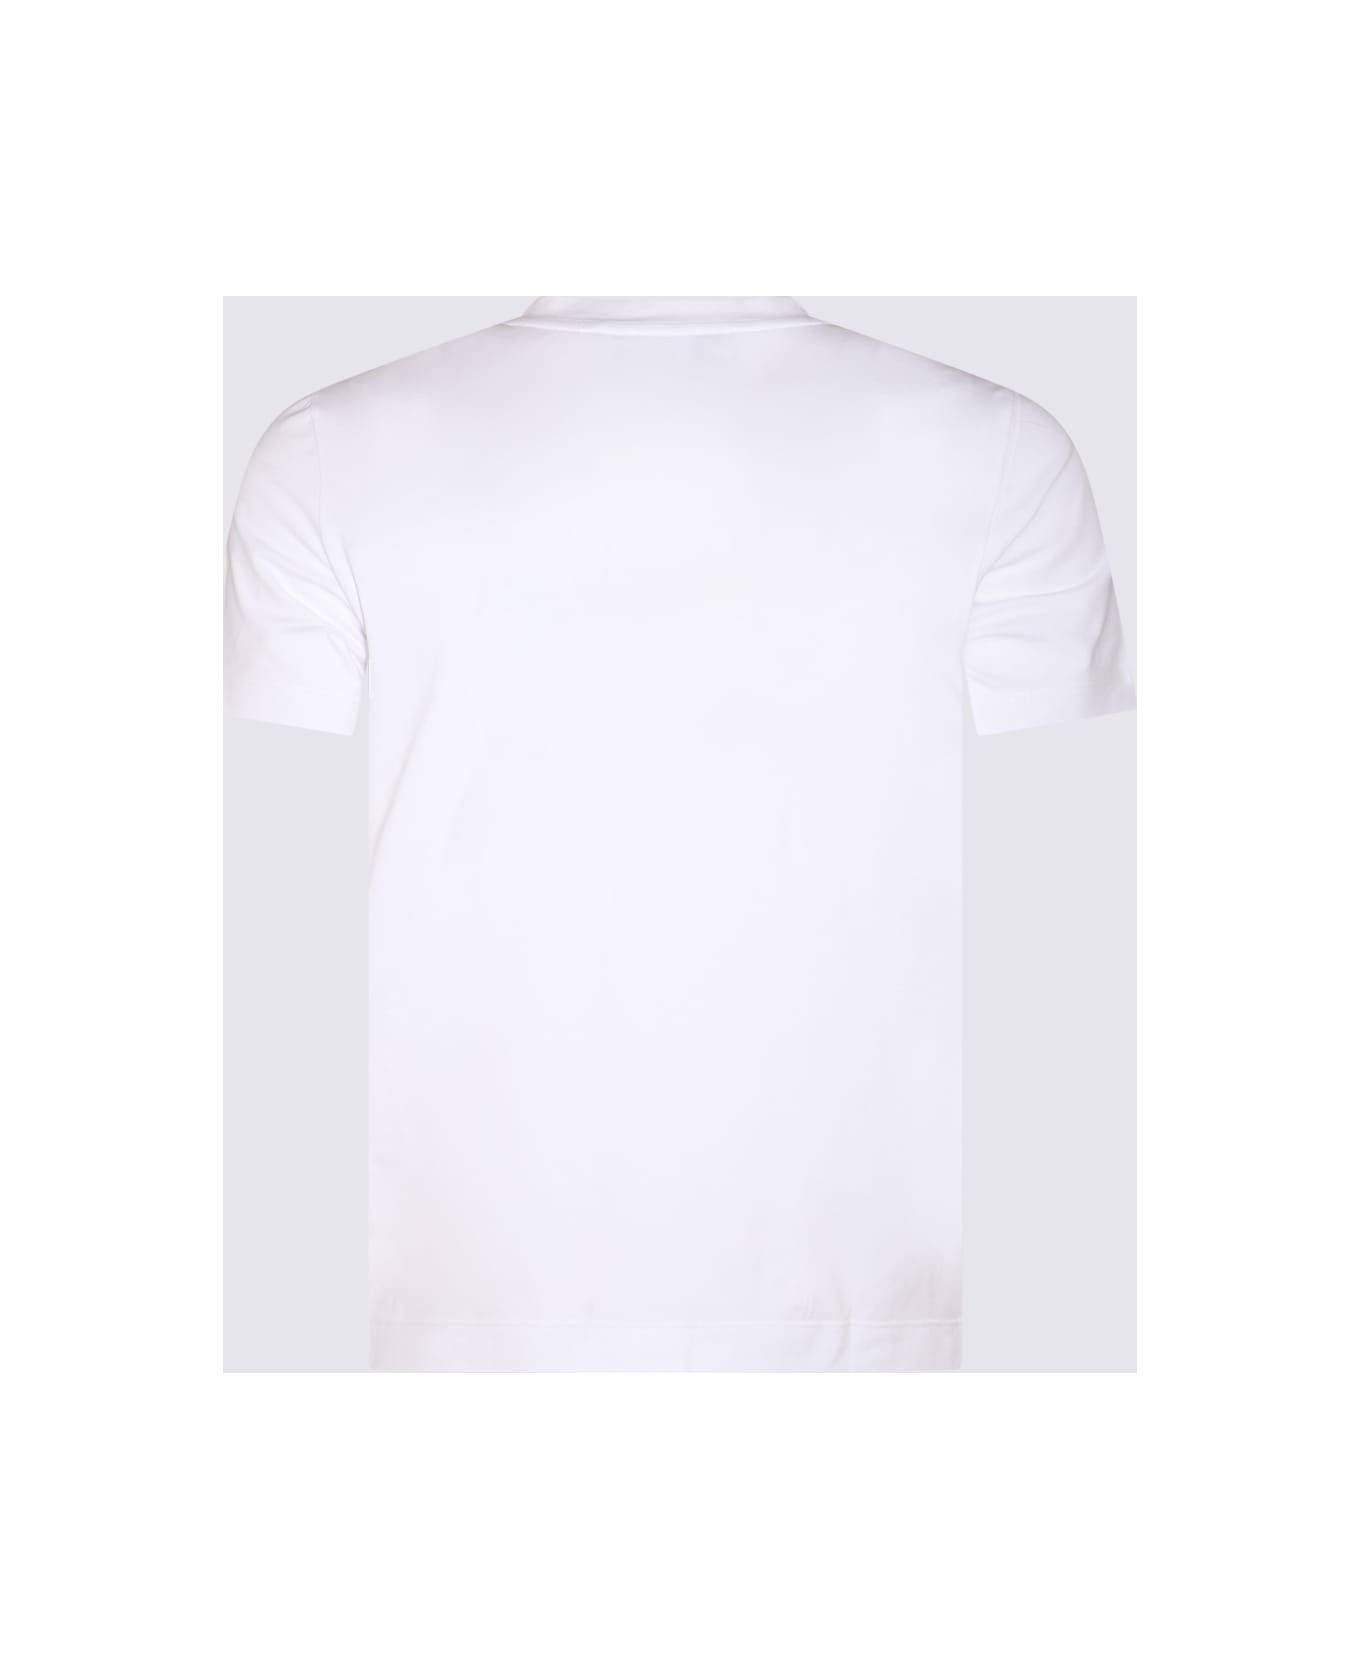 Cruciani White Cotton Blend T-shirt - White